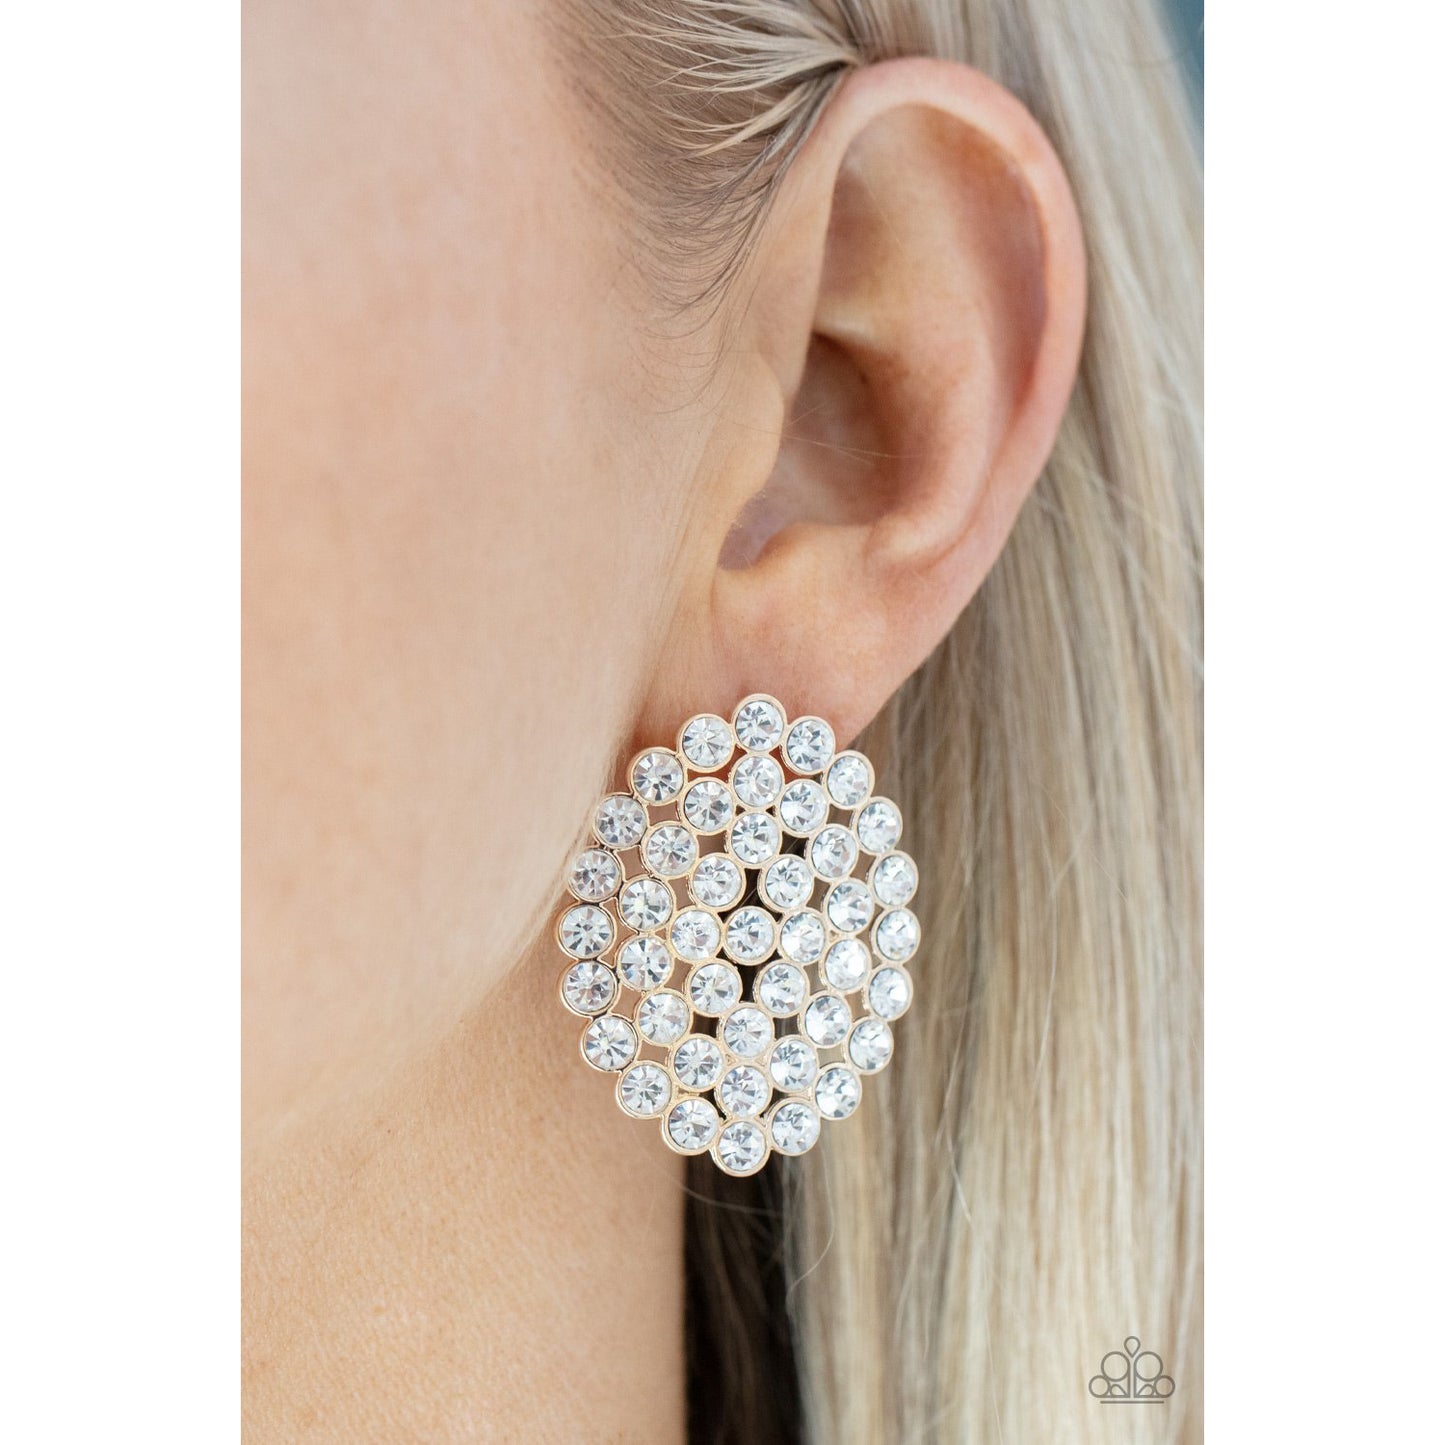 Drama School Dropout - Gold Rhinestone Earrings - Paparazzi Accessories - GlaMarous Titi Jewels